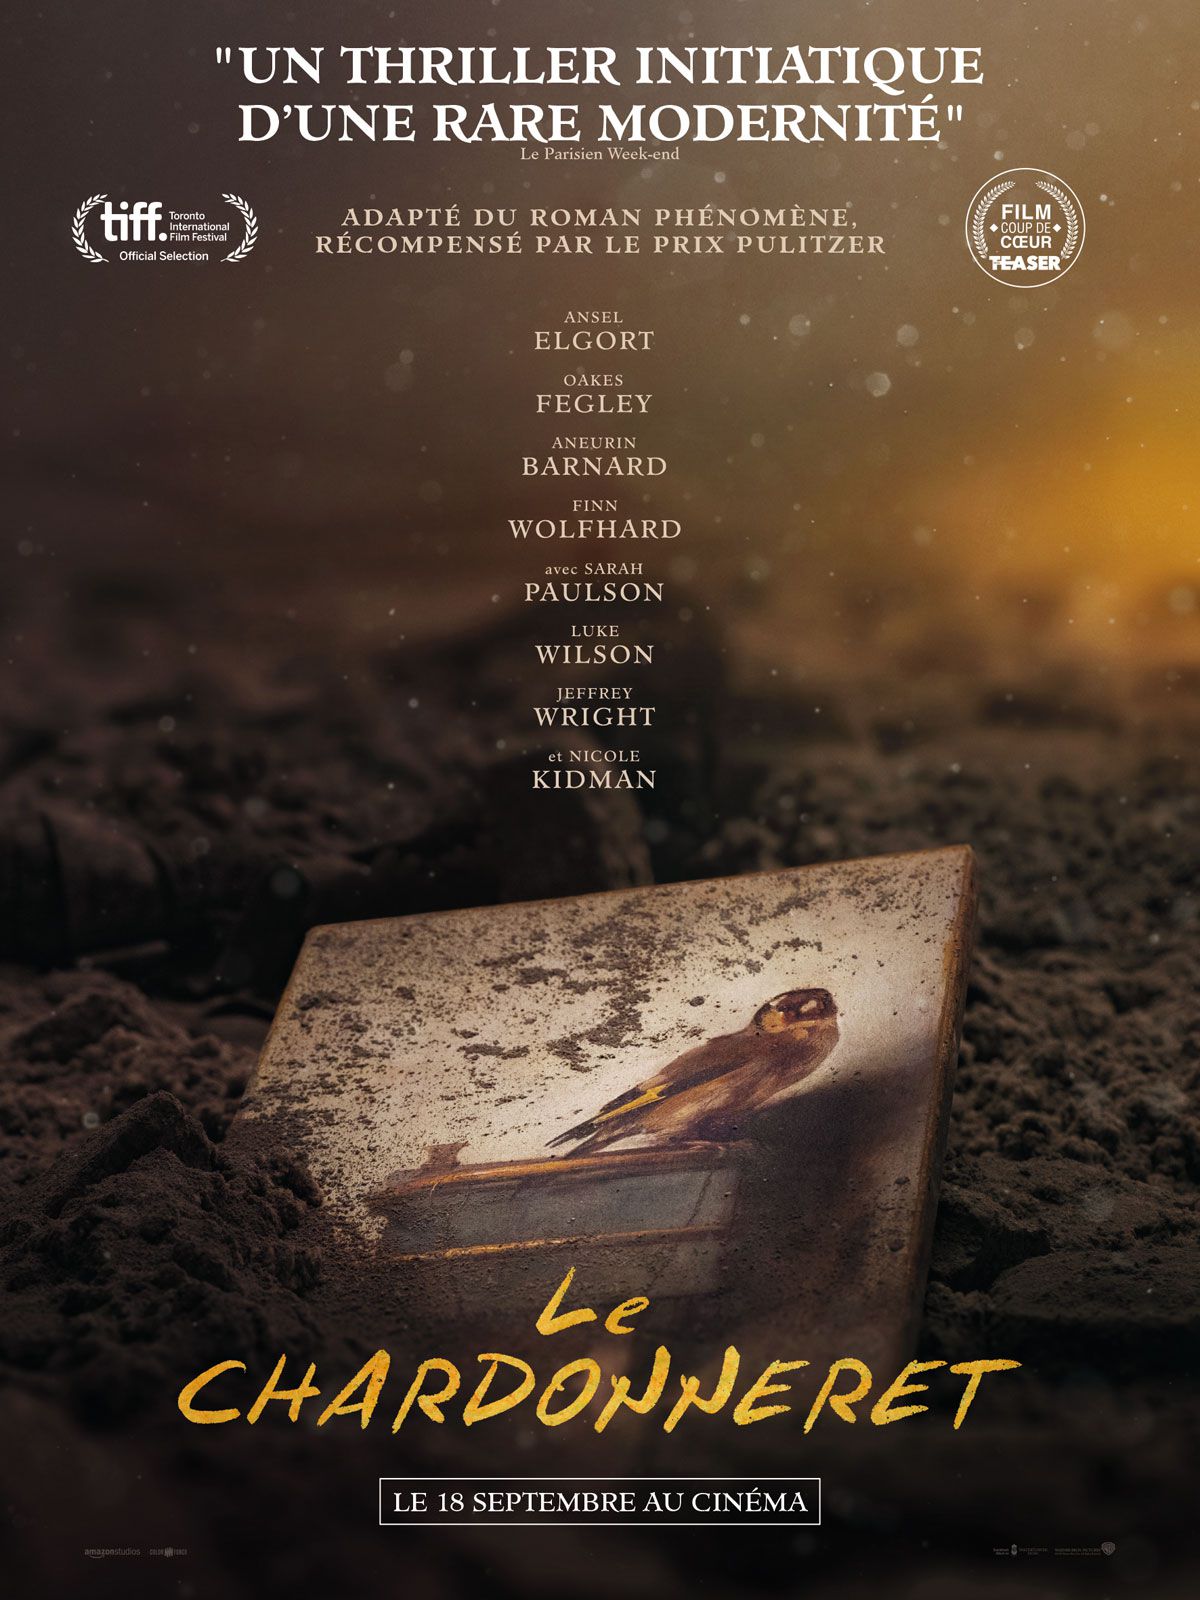 Le Chardonneret - Film (2019) streaming VF gratuit complet